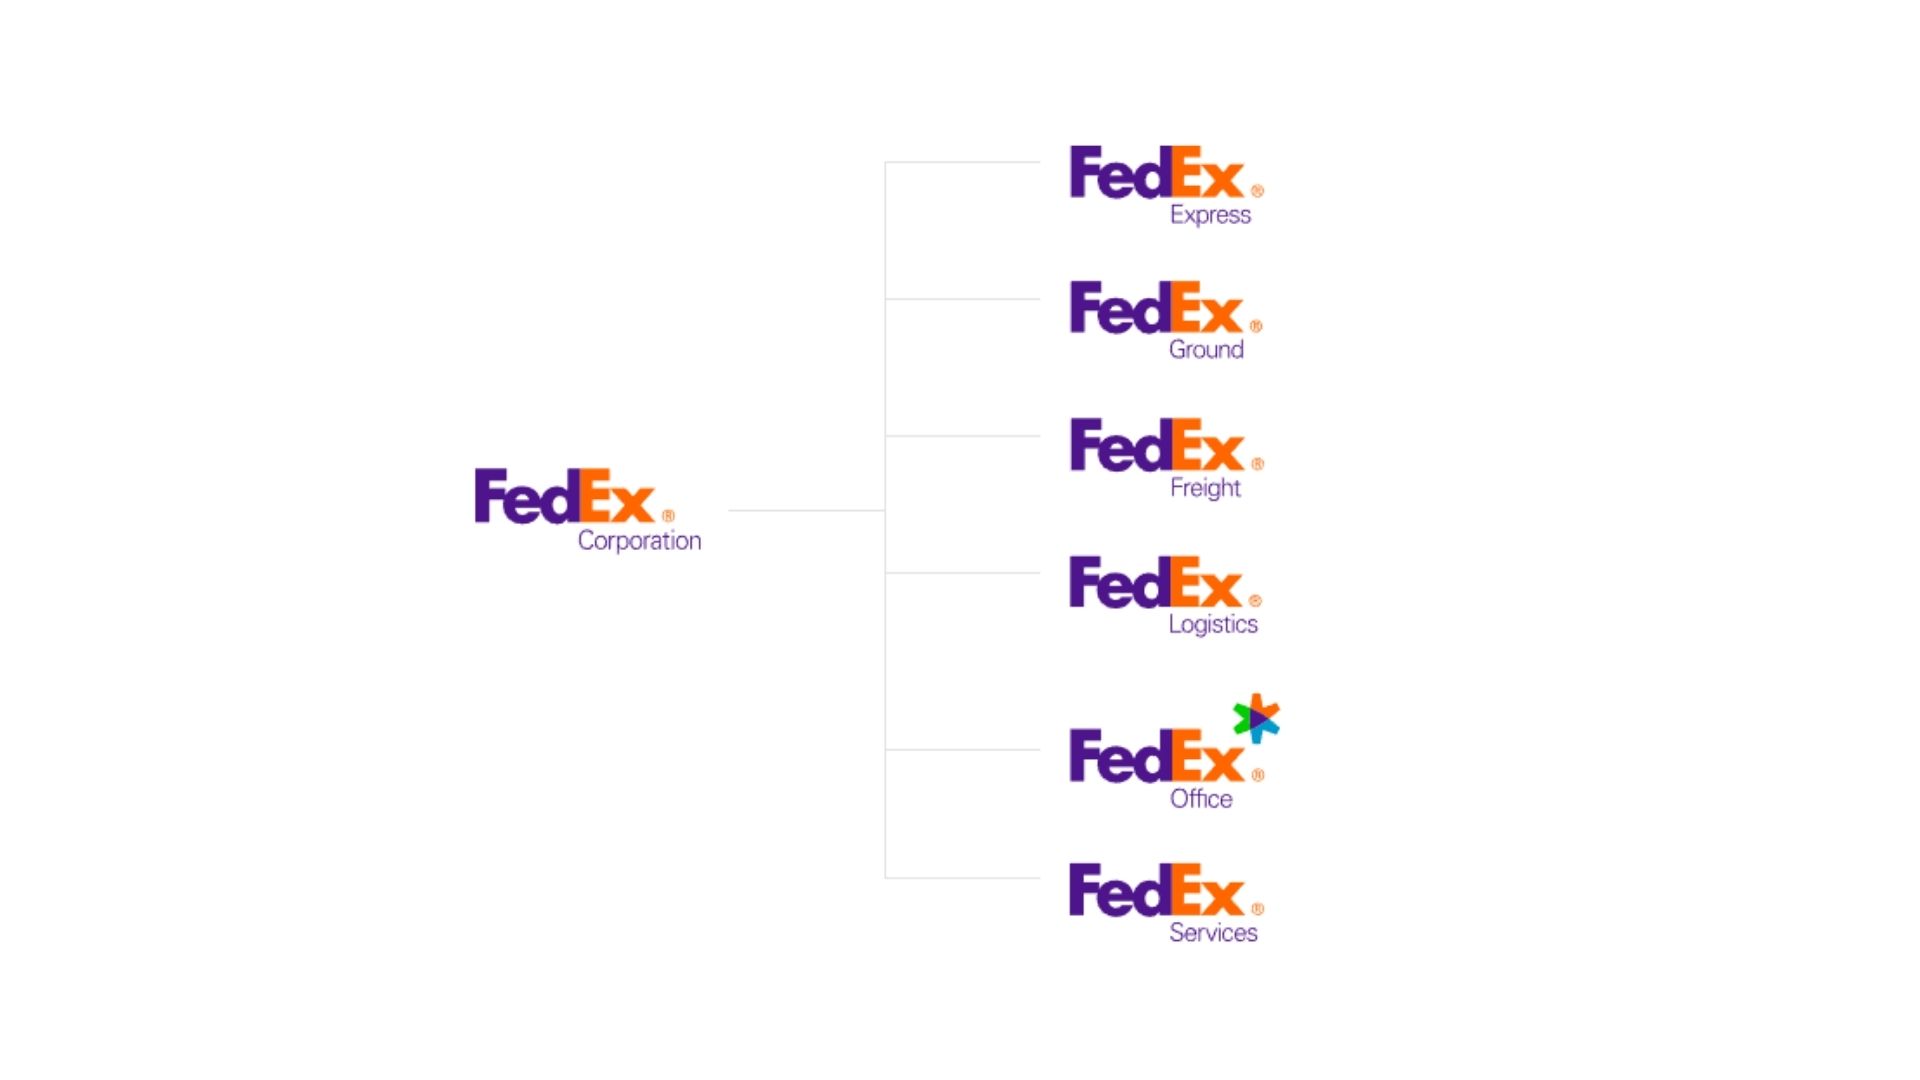 fedex corporate structure